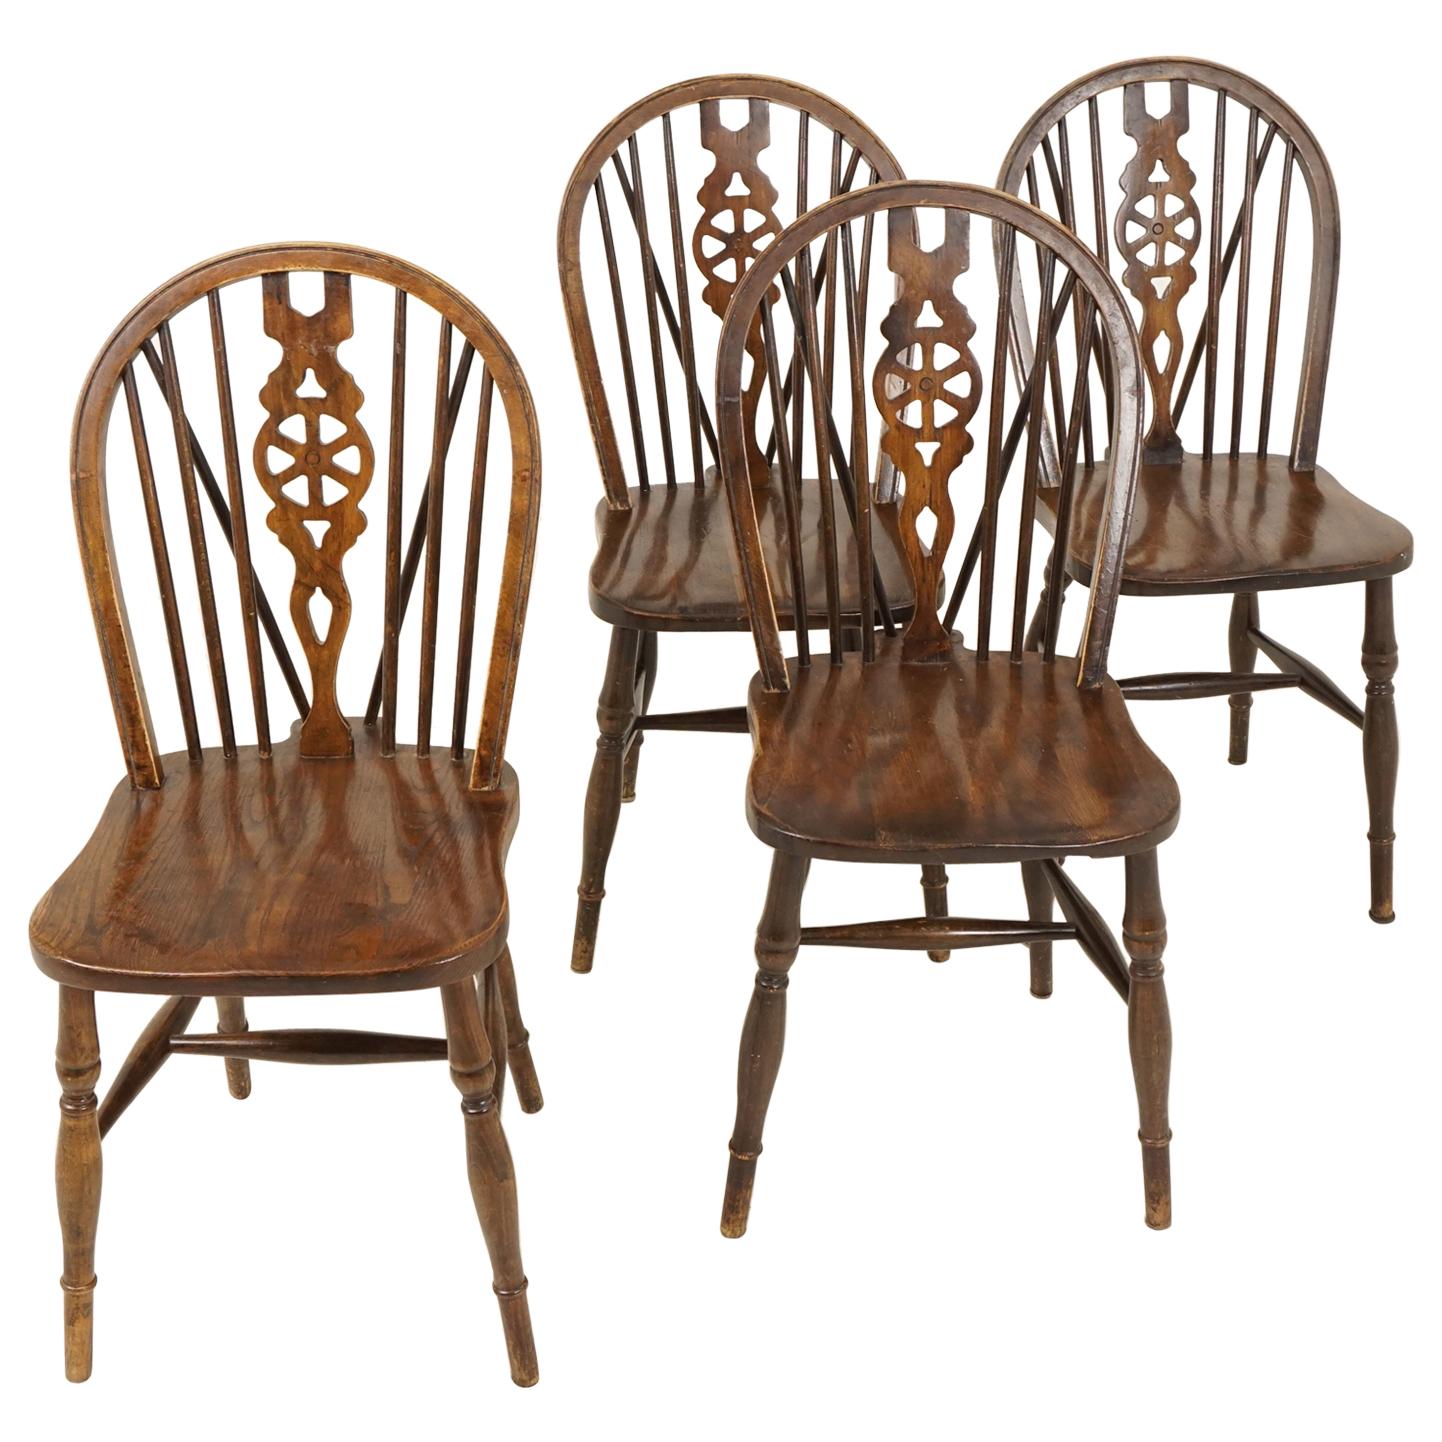 4 Vintage Beechwood Chairs, Wheelback Windsor Chairs, Canada 1940, B2270